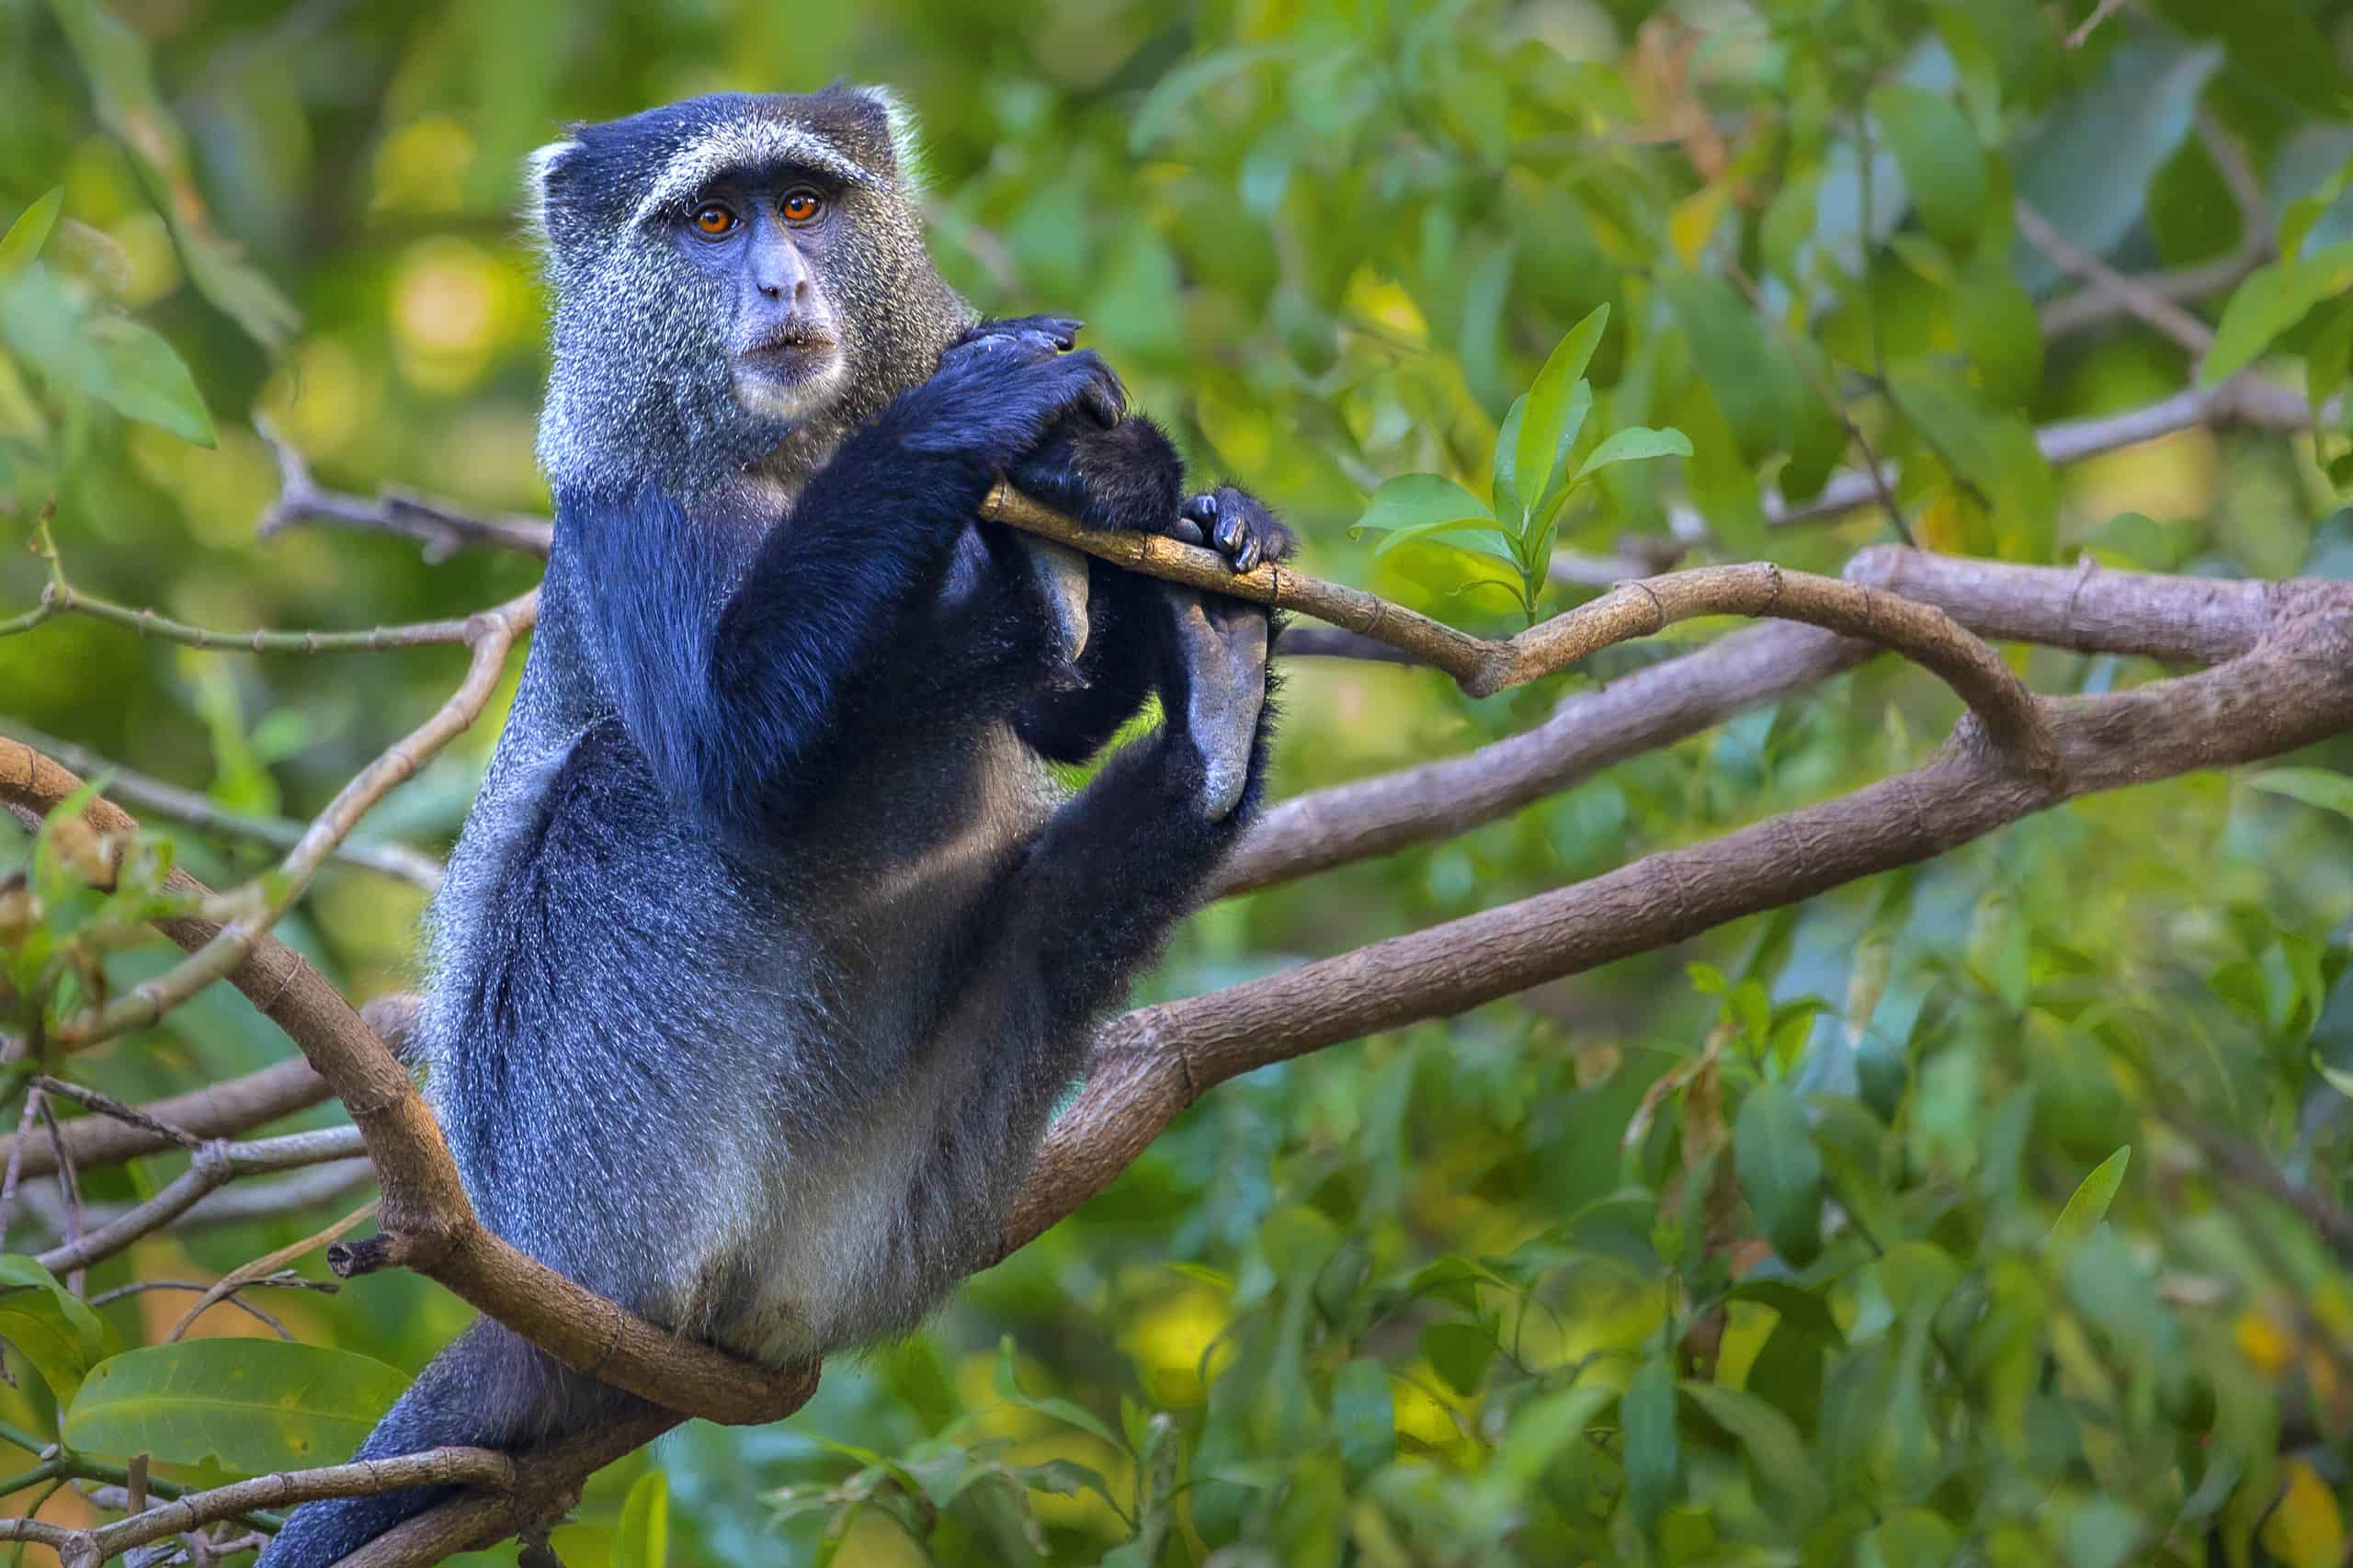 Blue monkey sitting on a tree branch.